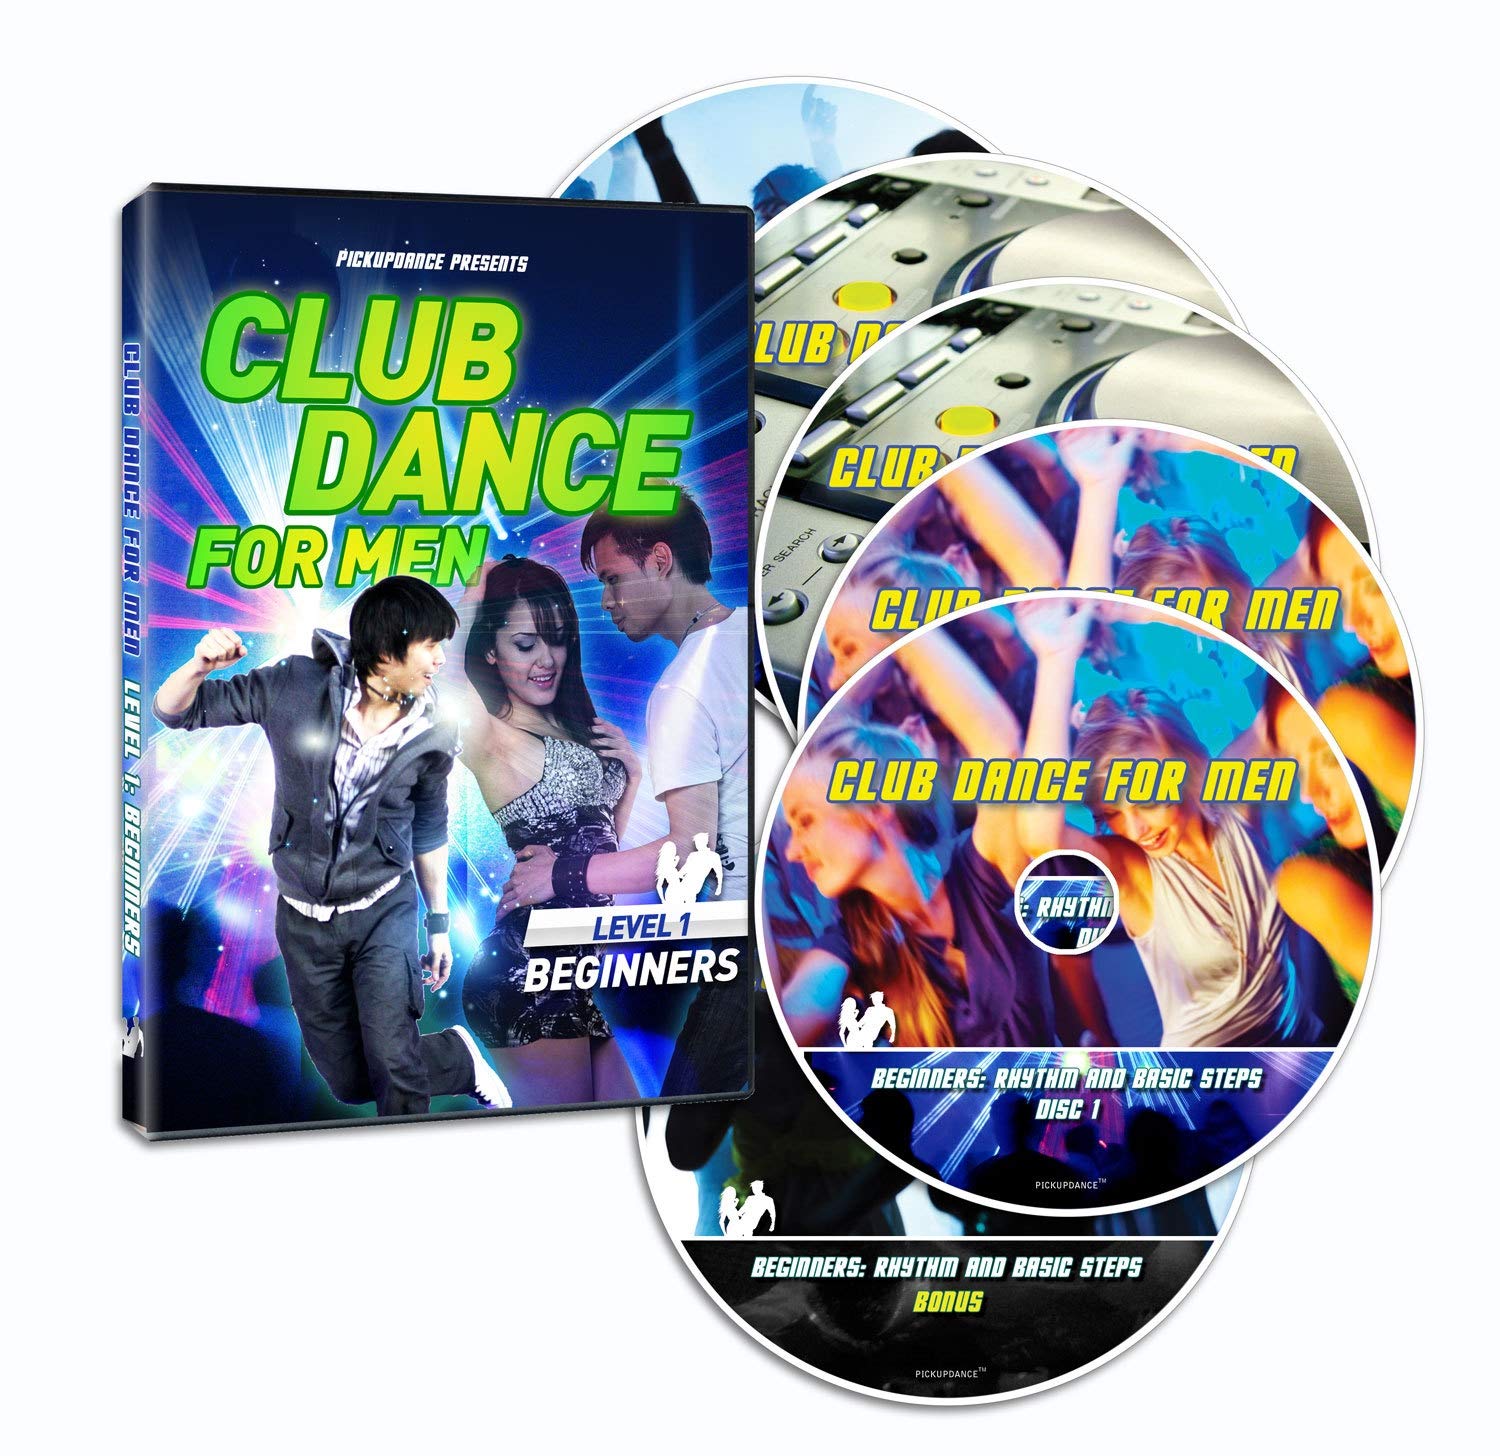 PickupDance - Club Dance for Men Level 1 & 2